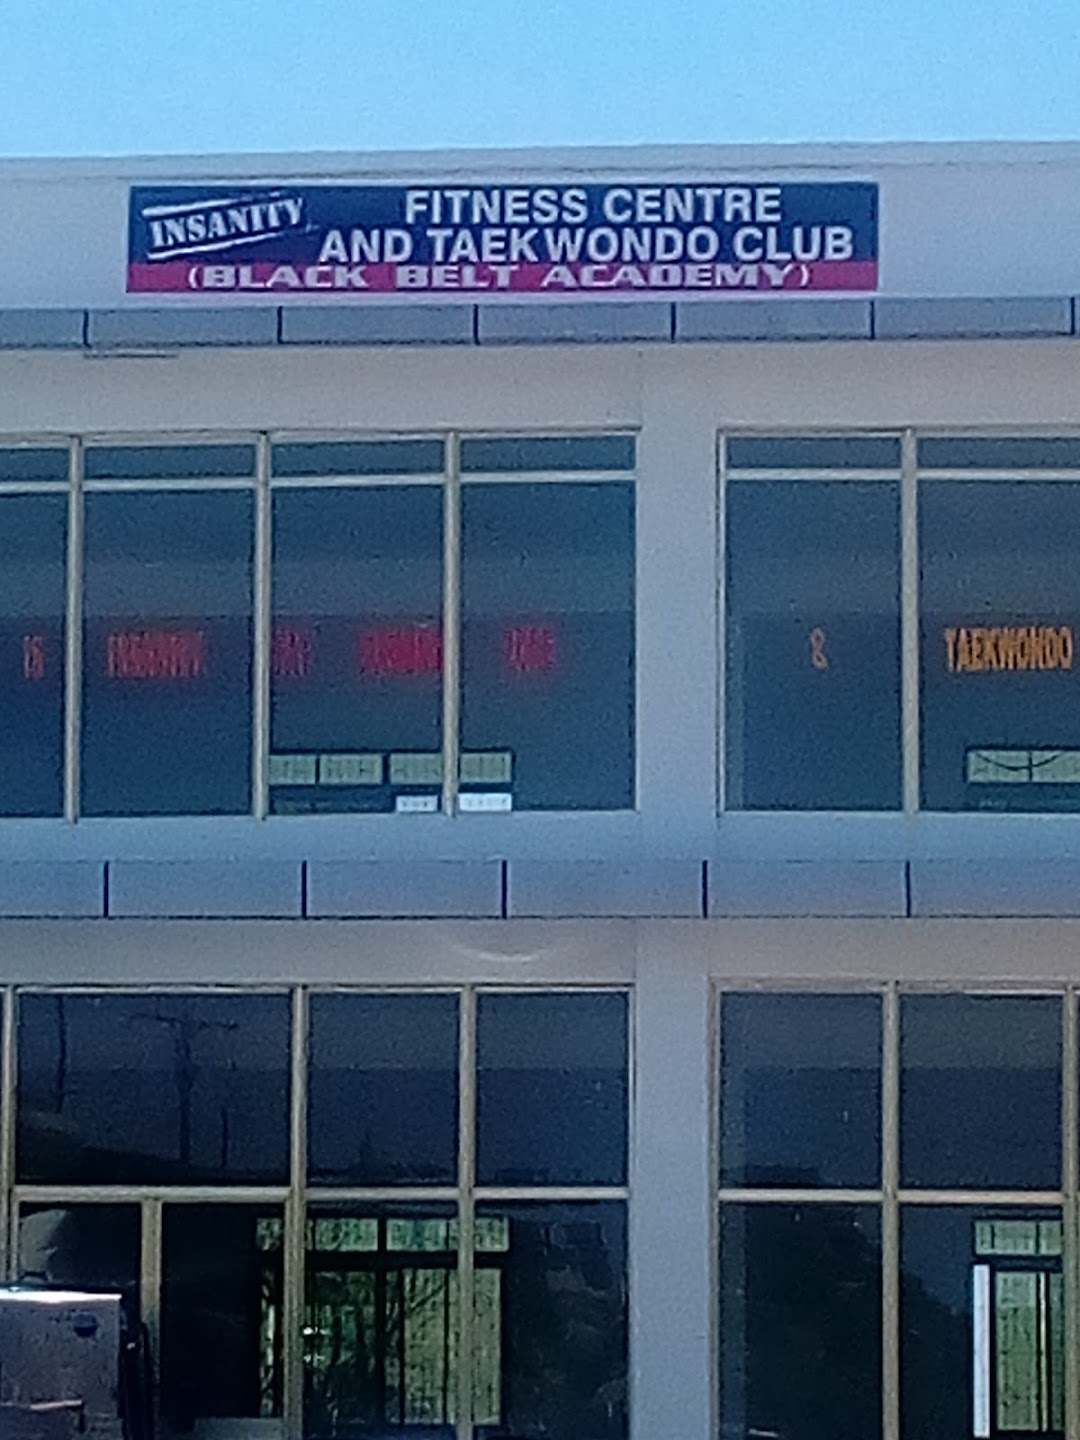 Insanity fitness center gym and taekwondo club.